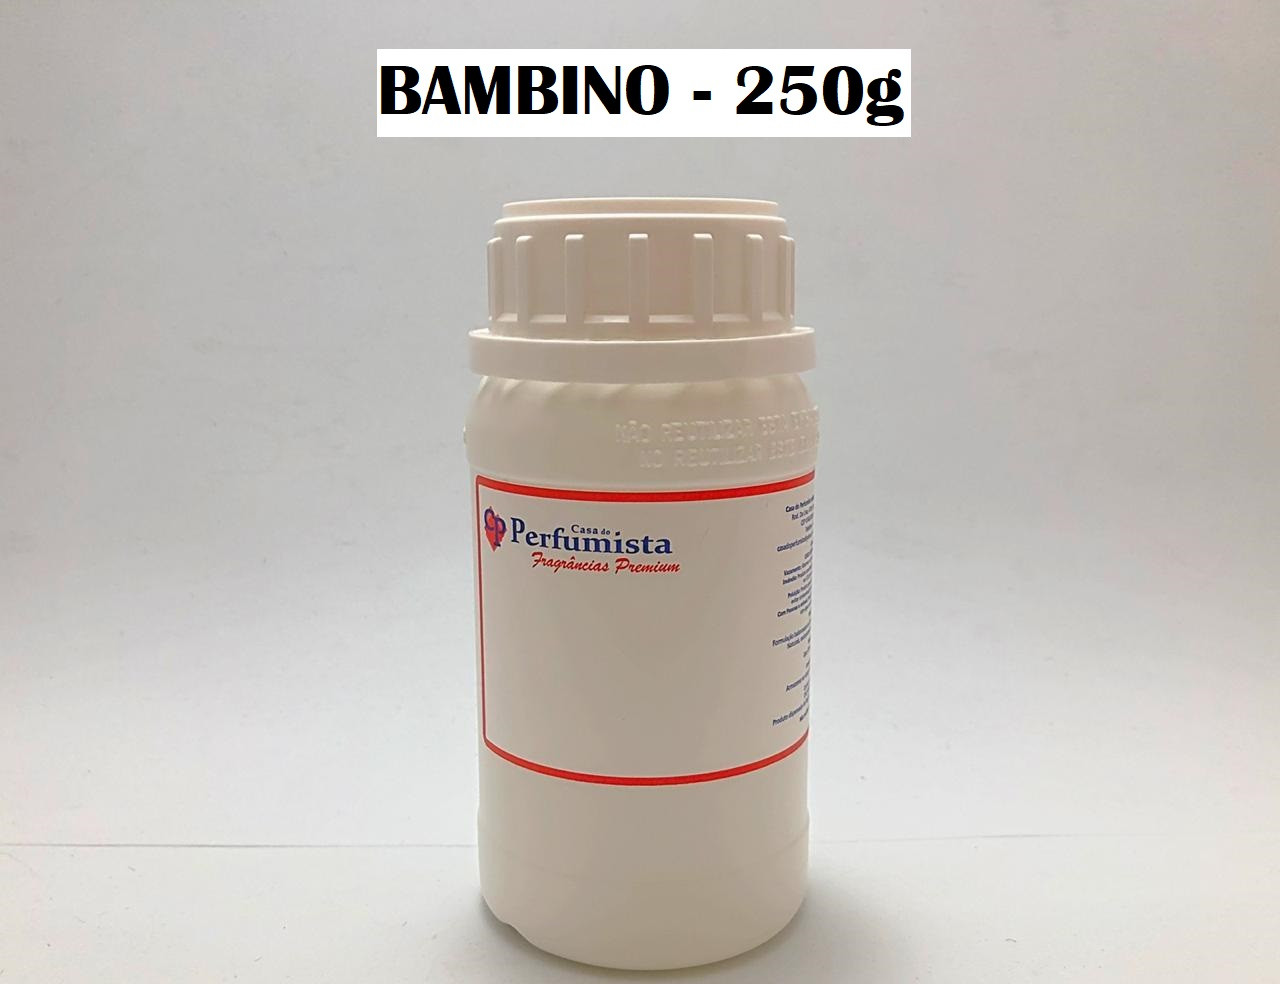 BAMBINO - 250g